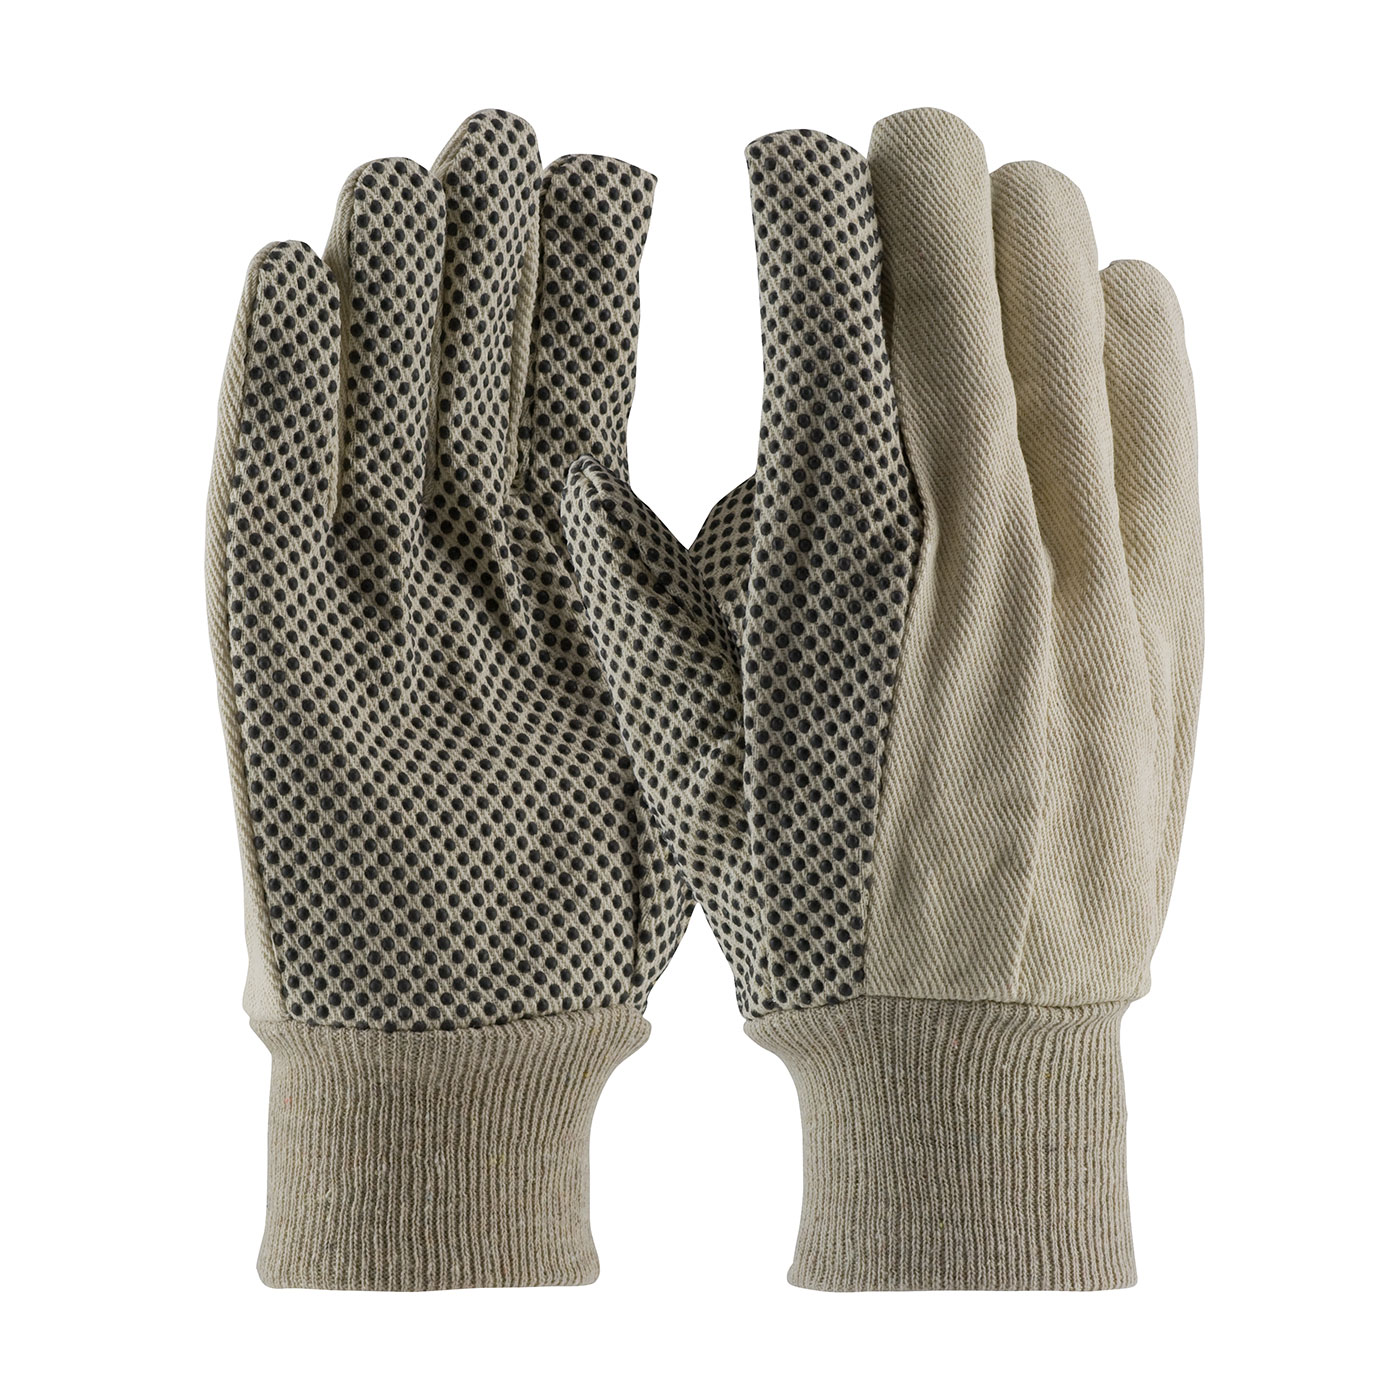 PIP Men's Economy Grade Natural 8 oz. PVC Dot Grip Cotton Canvas Gloves